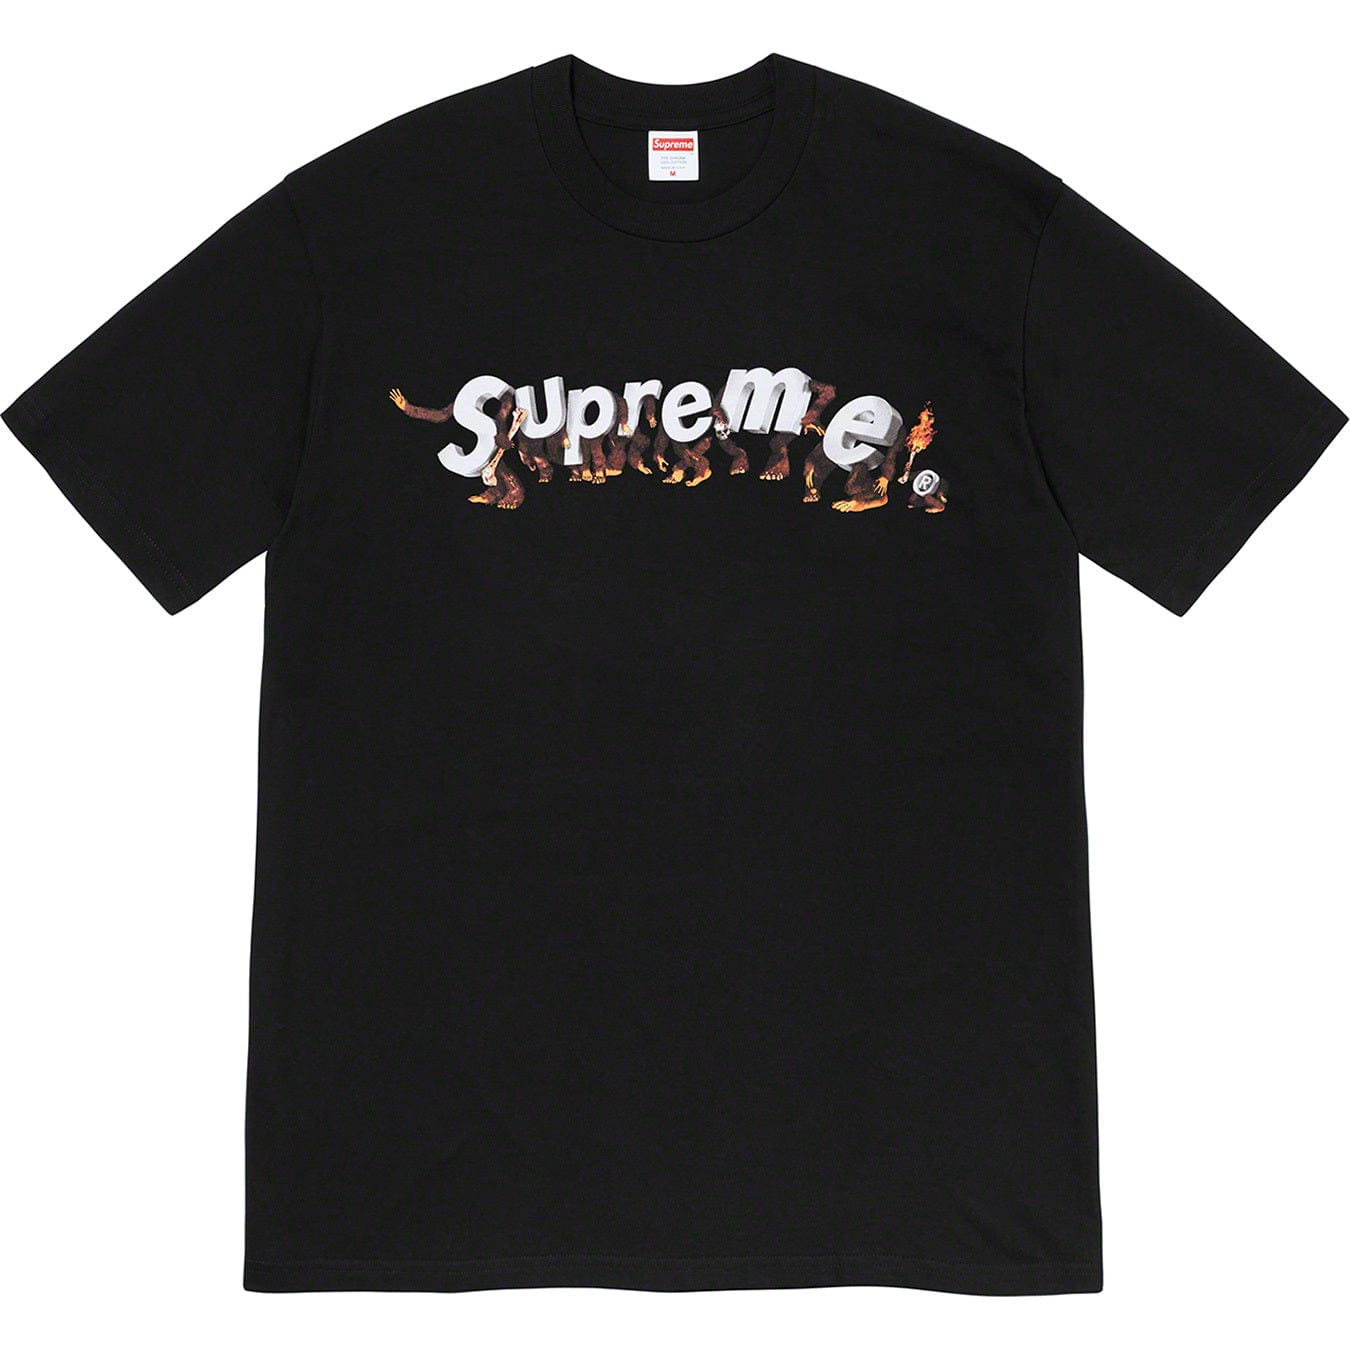 SUPREME CLOTHING SUPREME APES TEE BLACK X7rH-Rtdx